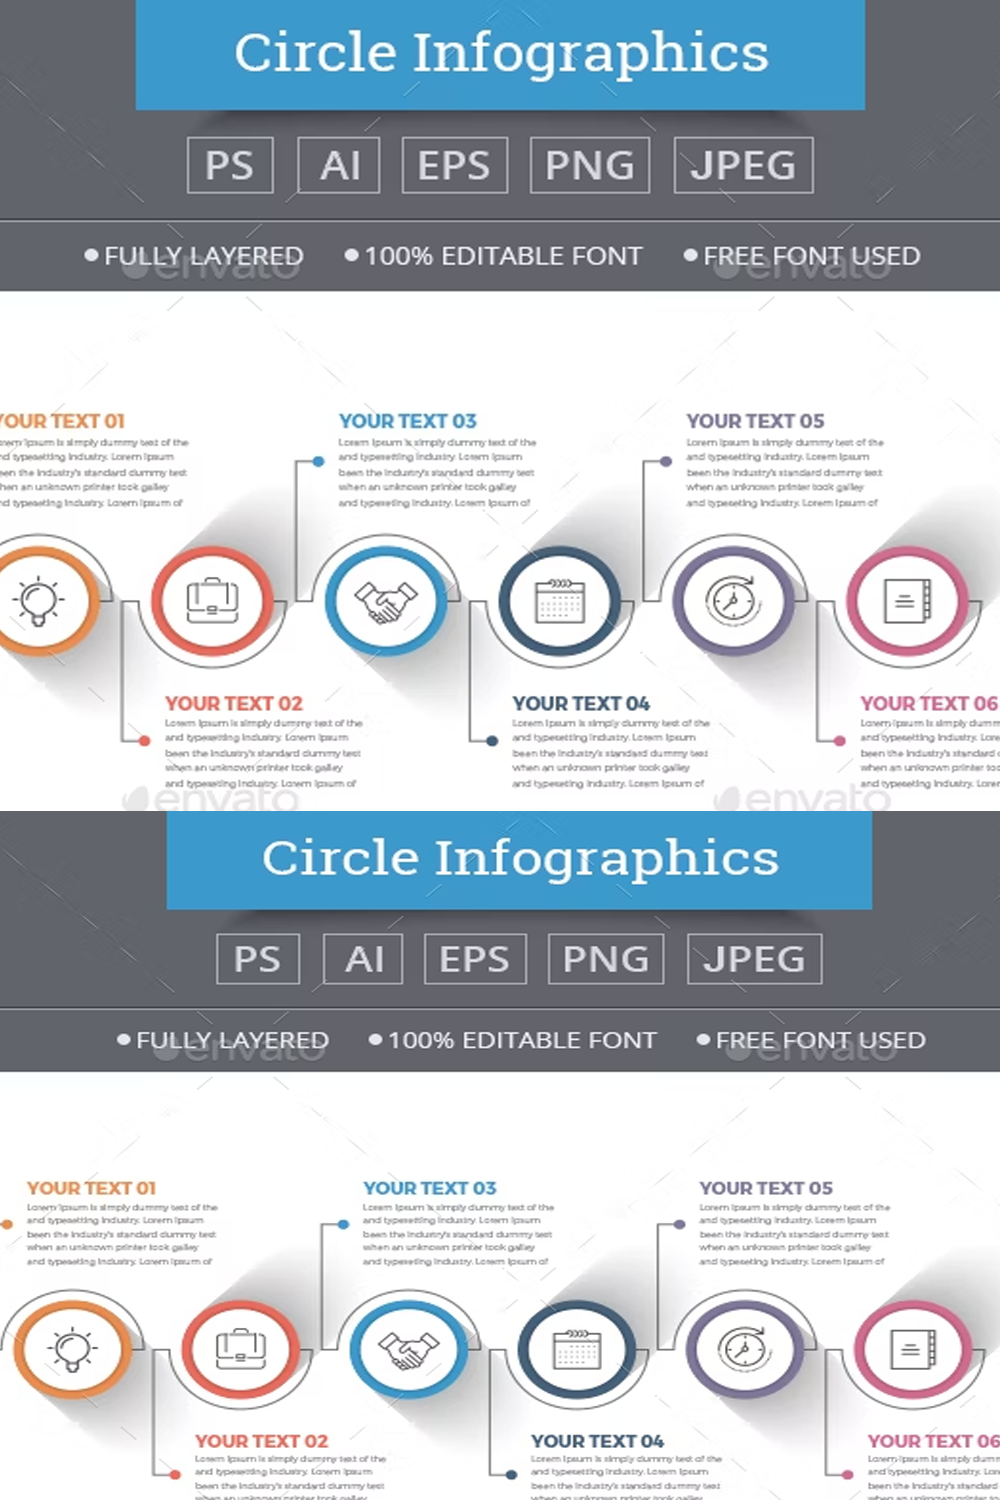 Illustrations simple modern circle infographics of pinterest.